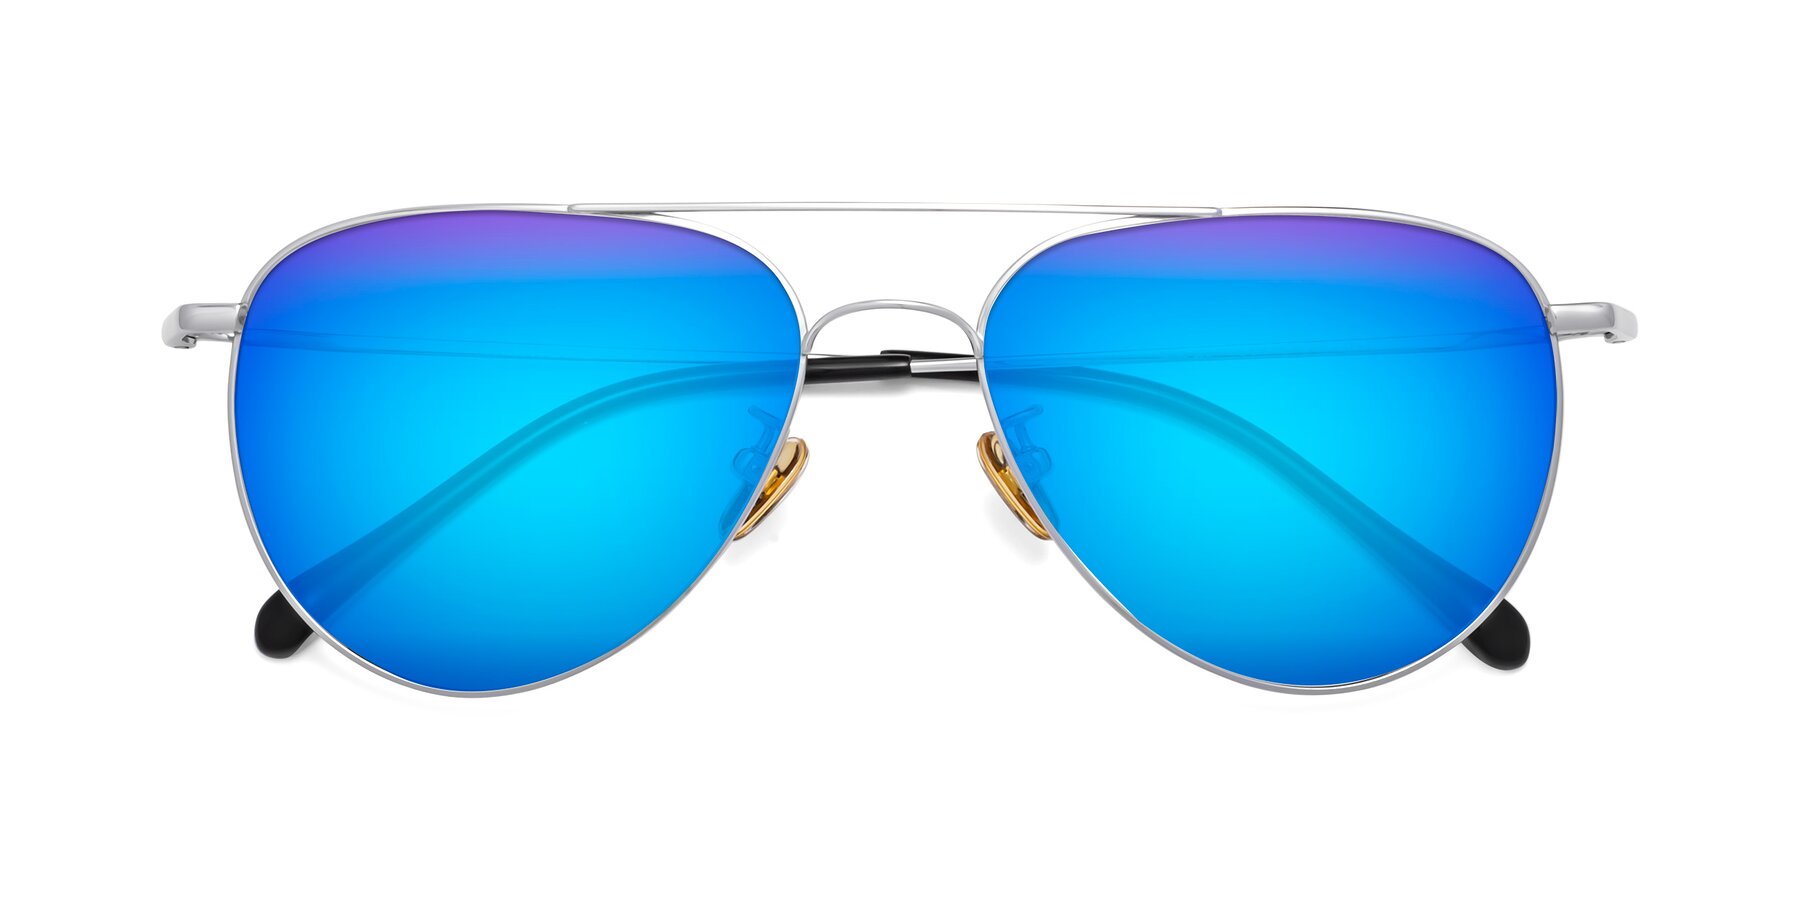 Silver Classic Titanium Aviator Mirrored Sunglasses with Blue Sunwear ...